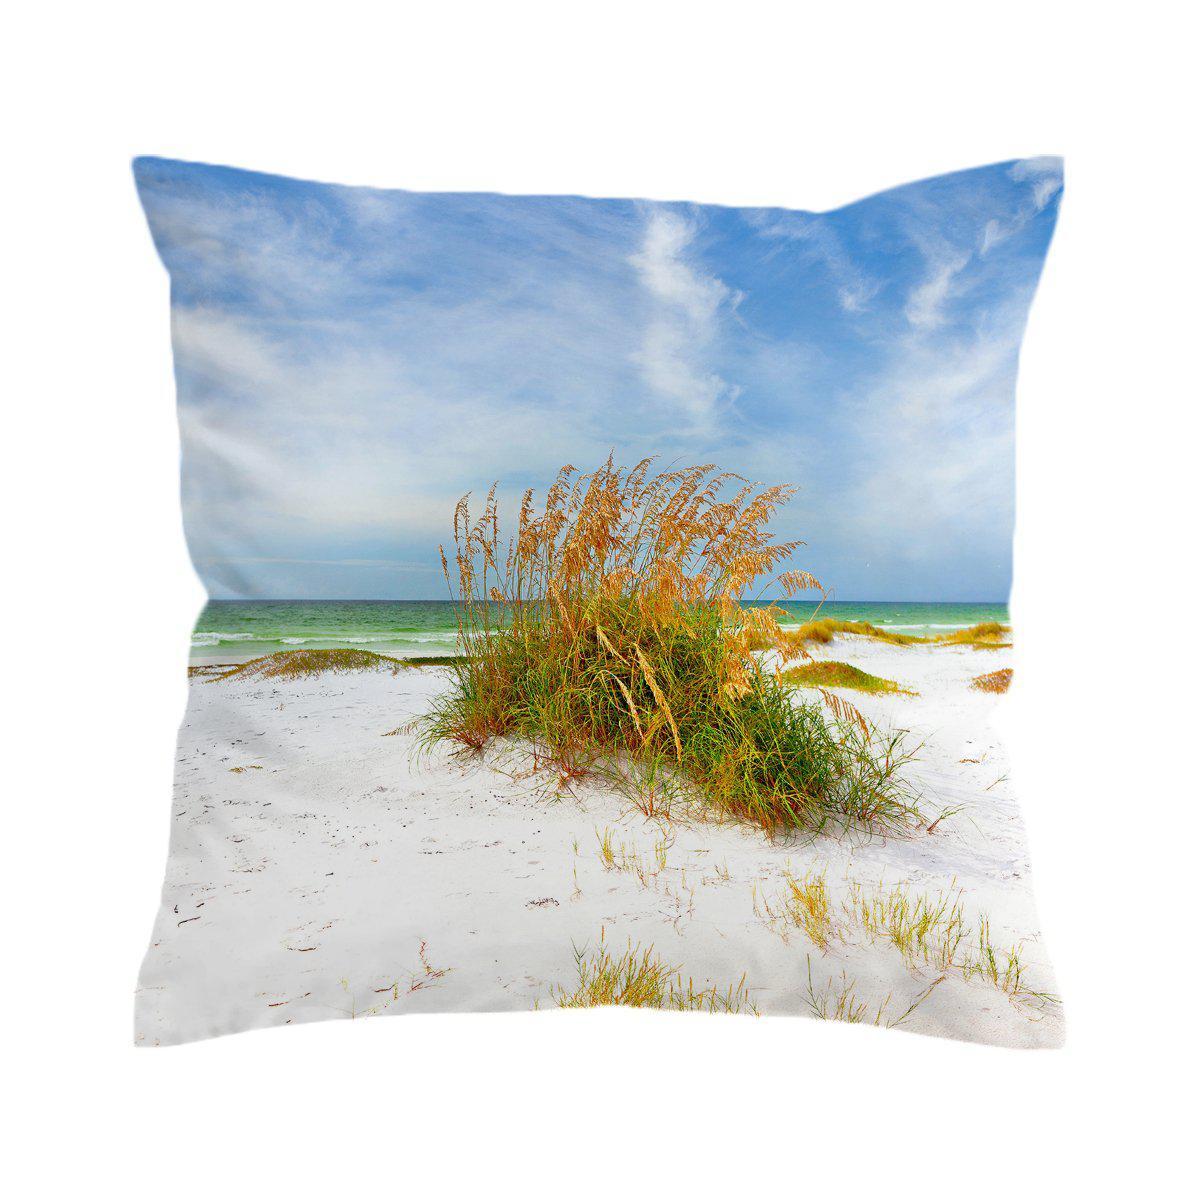 Florida Dreaming Pillow Cover